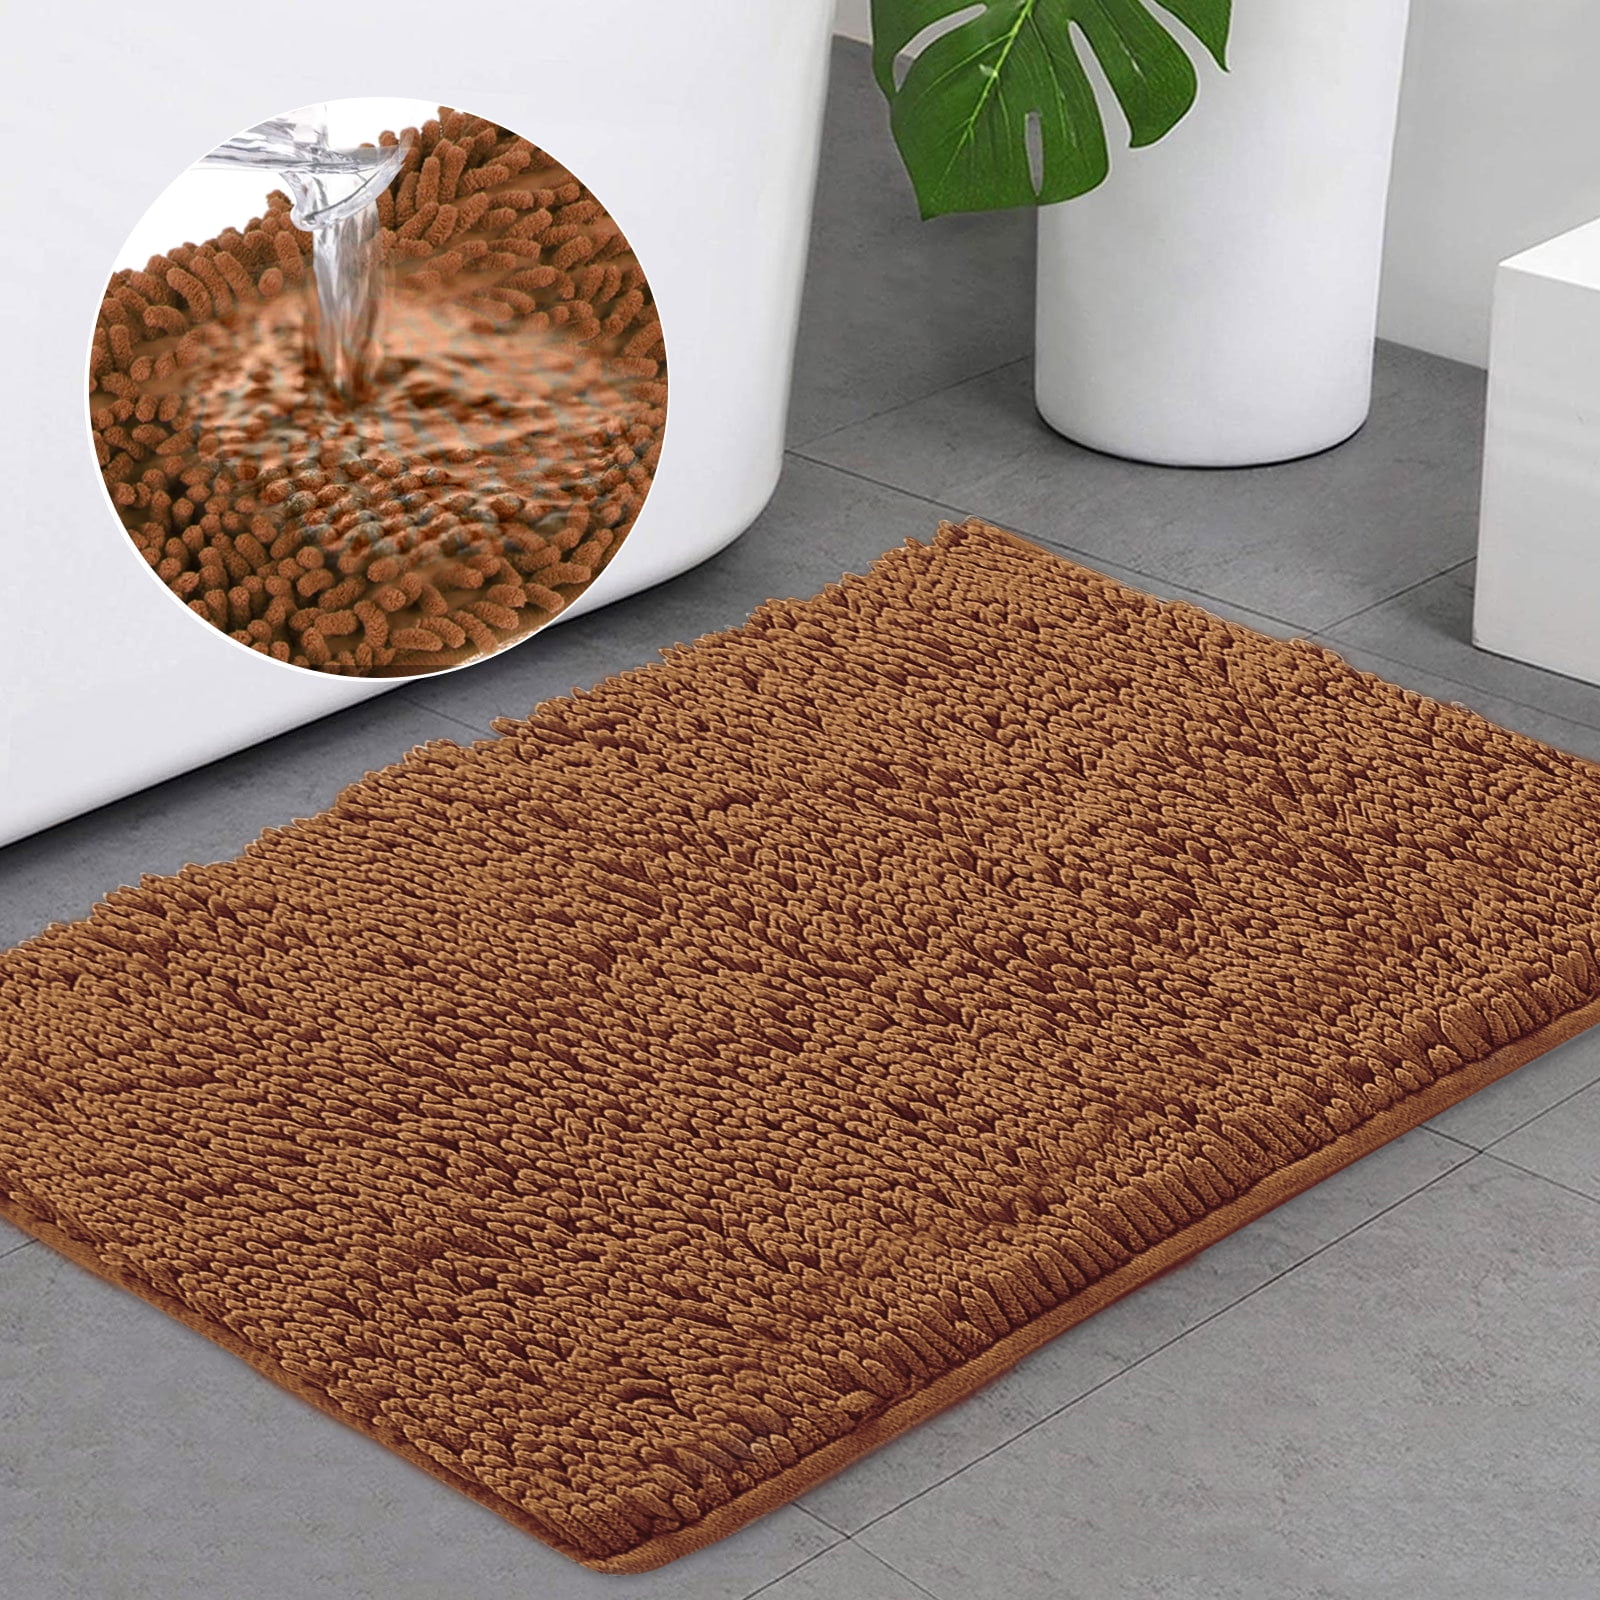 24x16" New Marble Design Non-slip Door Floor Bathroom Rug Mat Home Decor Carpet 